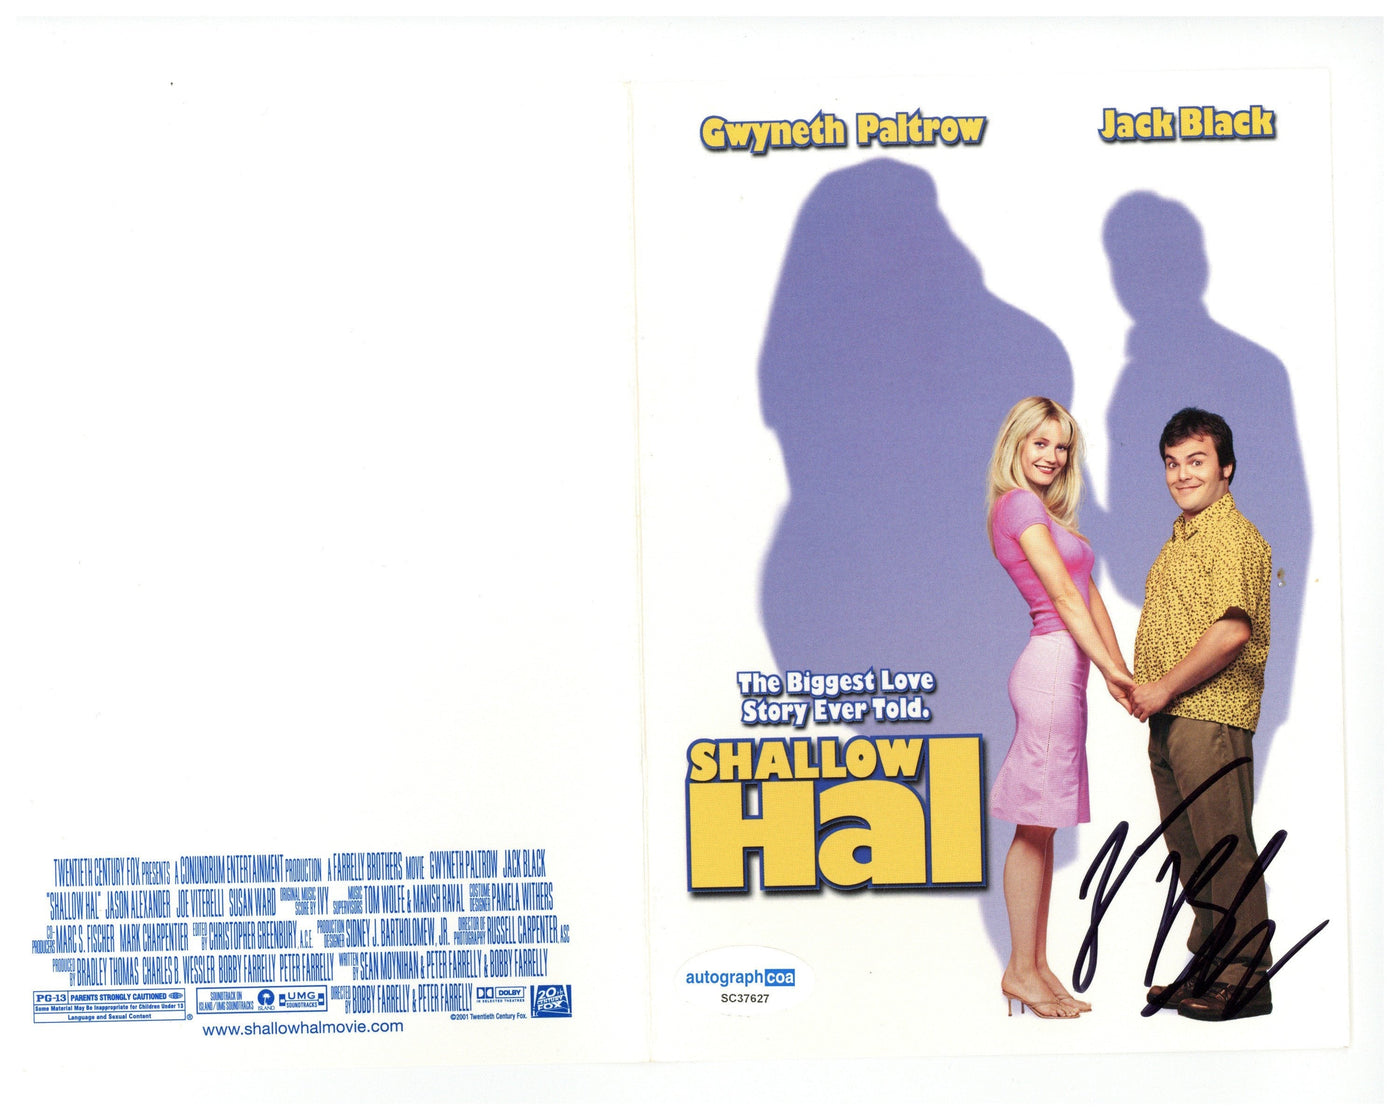 Jack Black Signed Shallow Hal Promotional Card Authentic Autographed ACOA